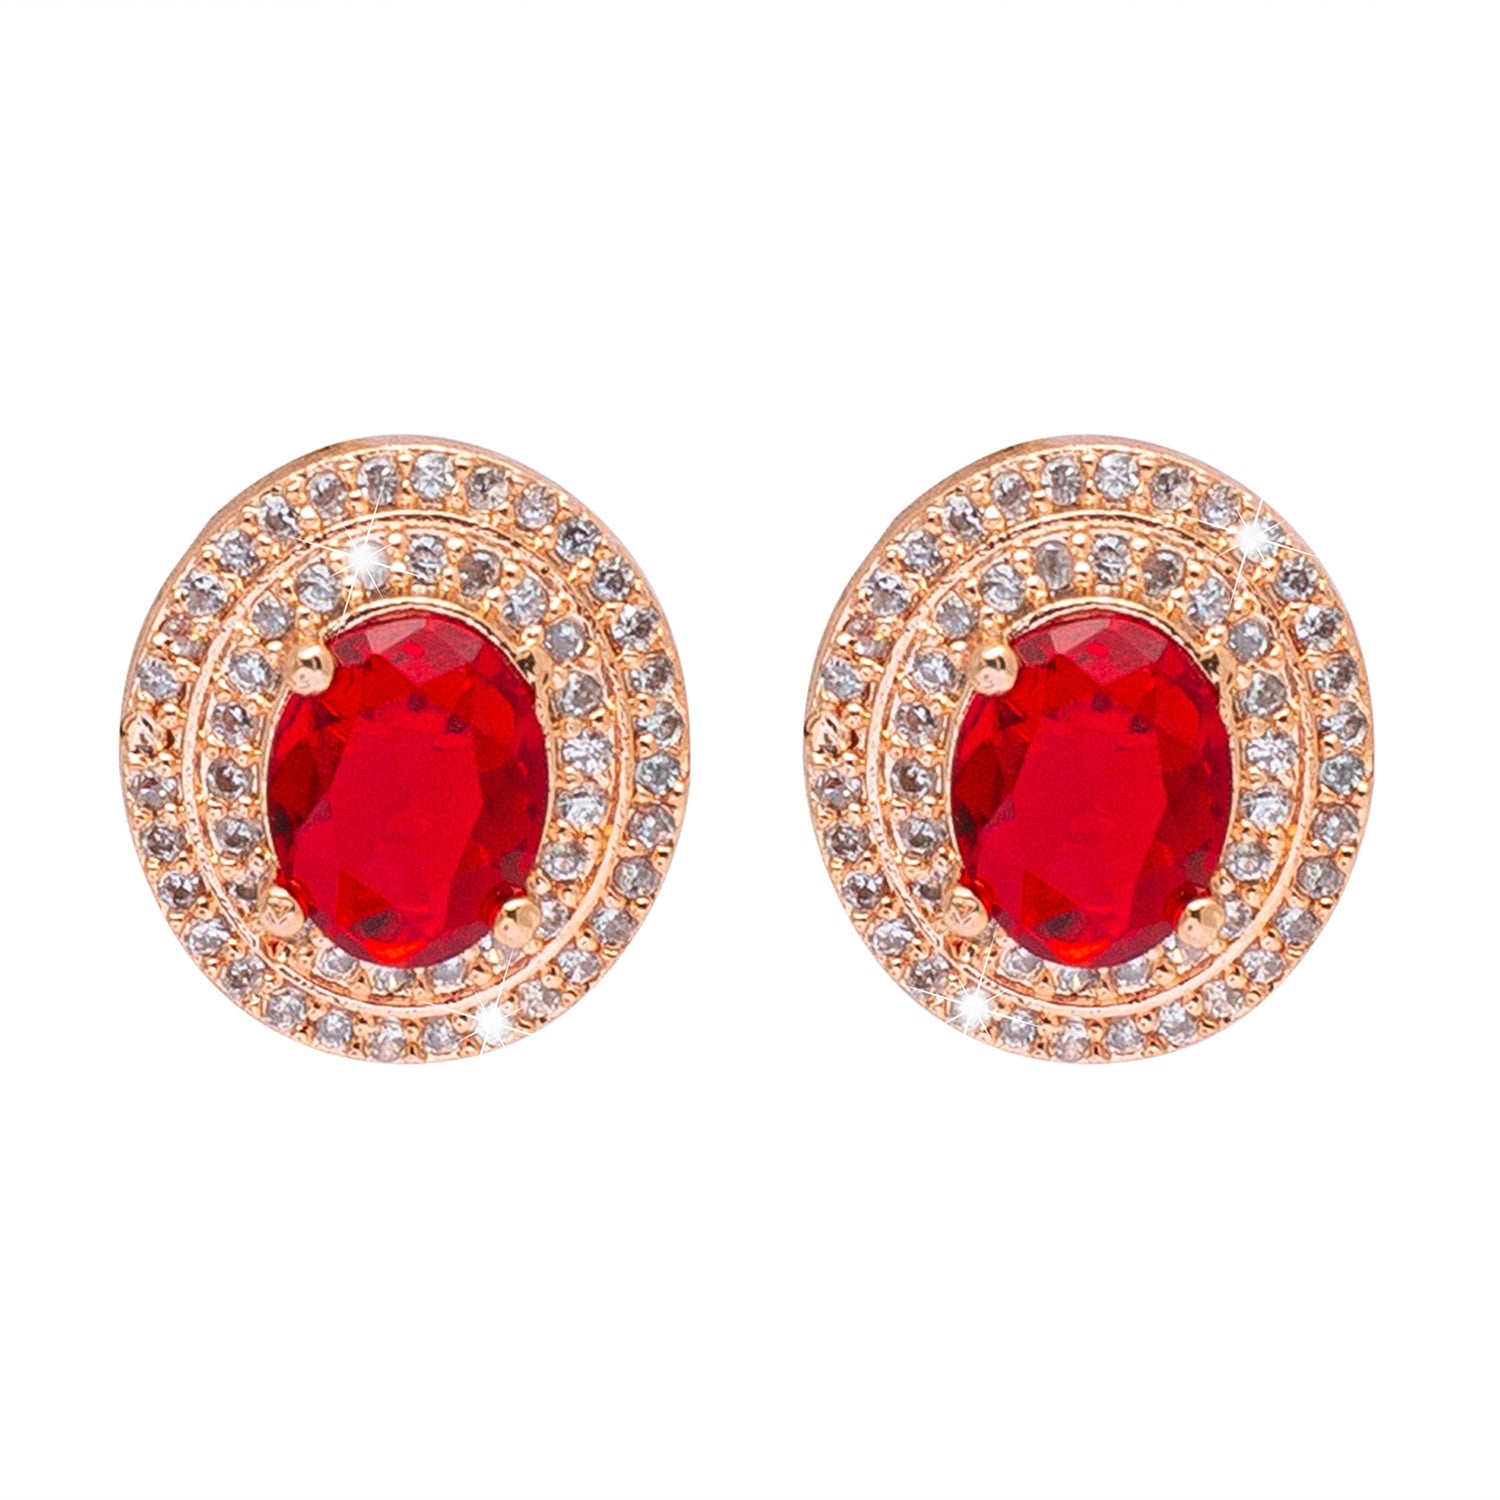 Buy Gold Oxidised Red Stone Earrings Online - fredefy – Fredefy